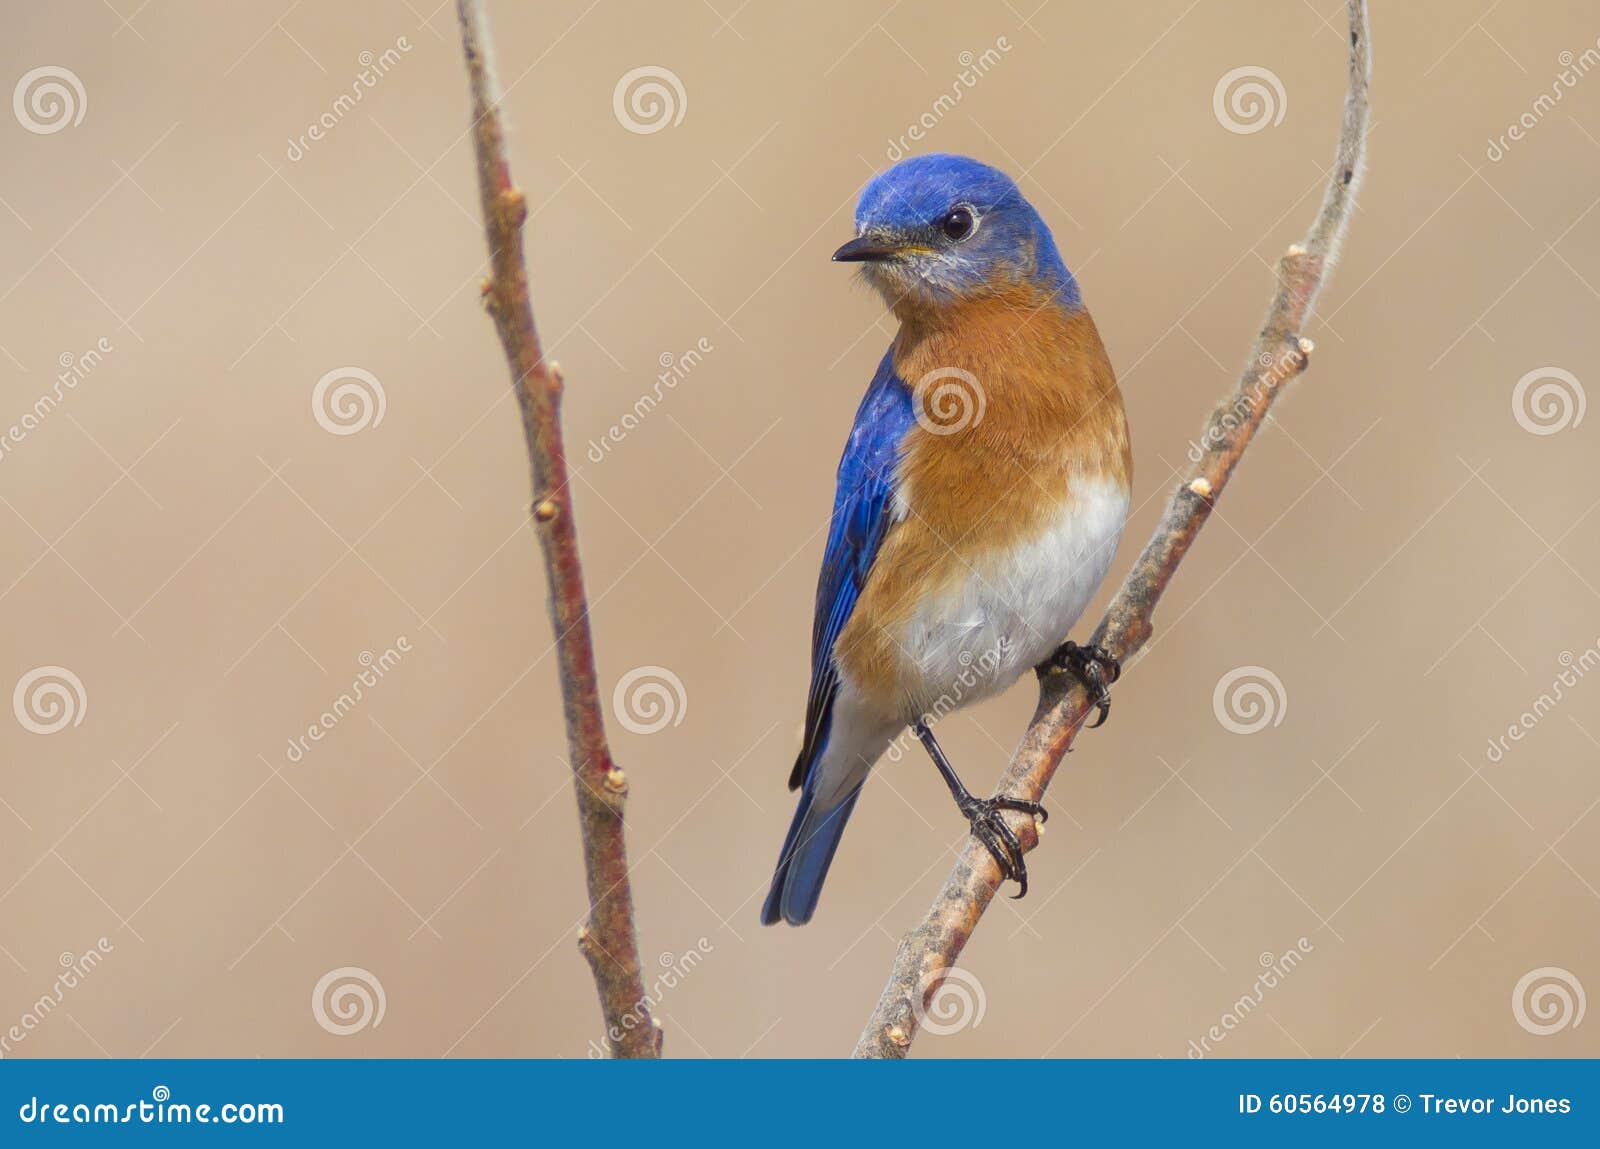 male eastern bluebird in the springtime air